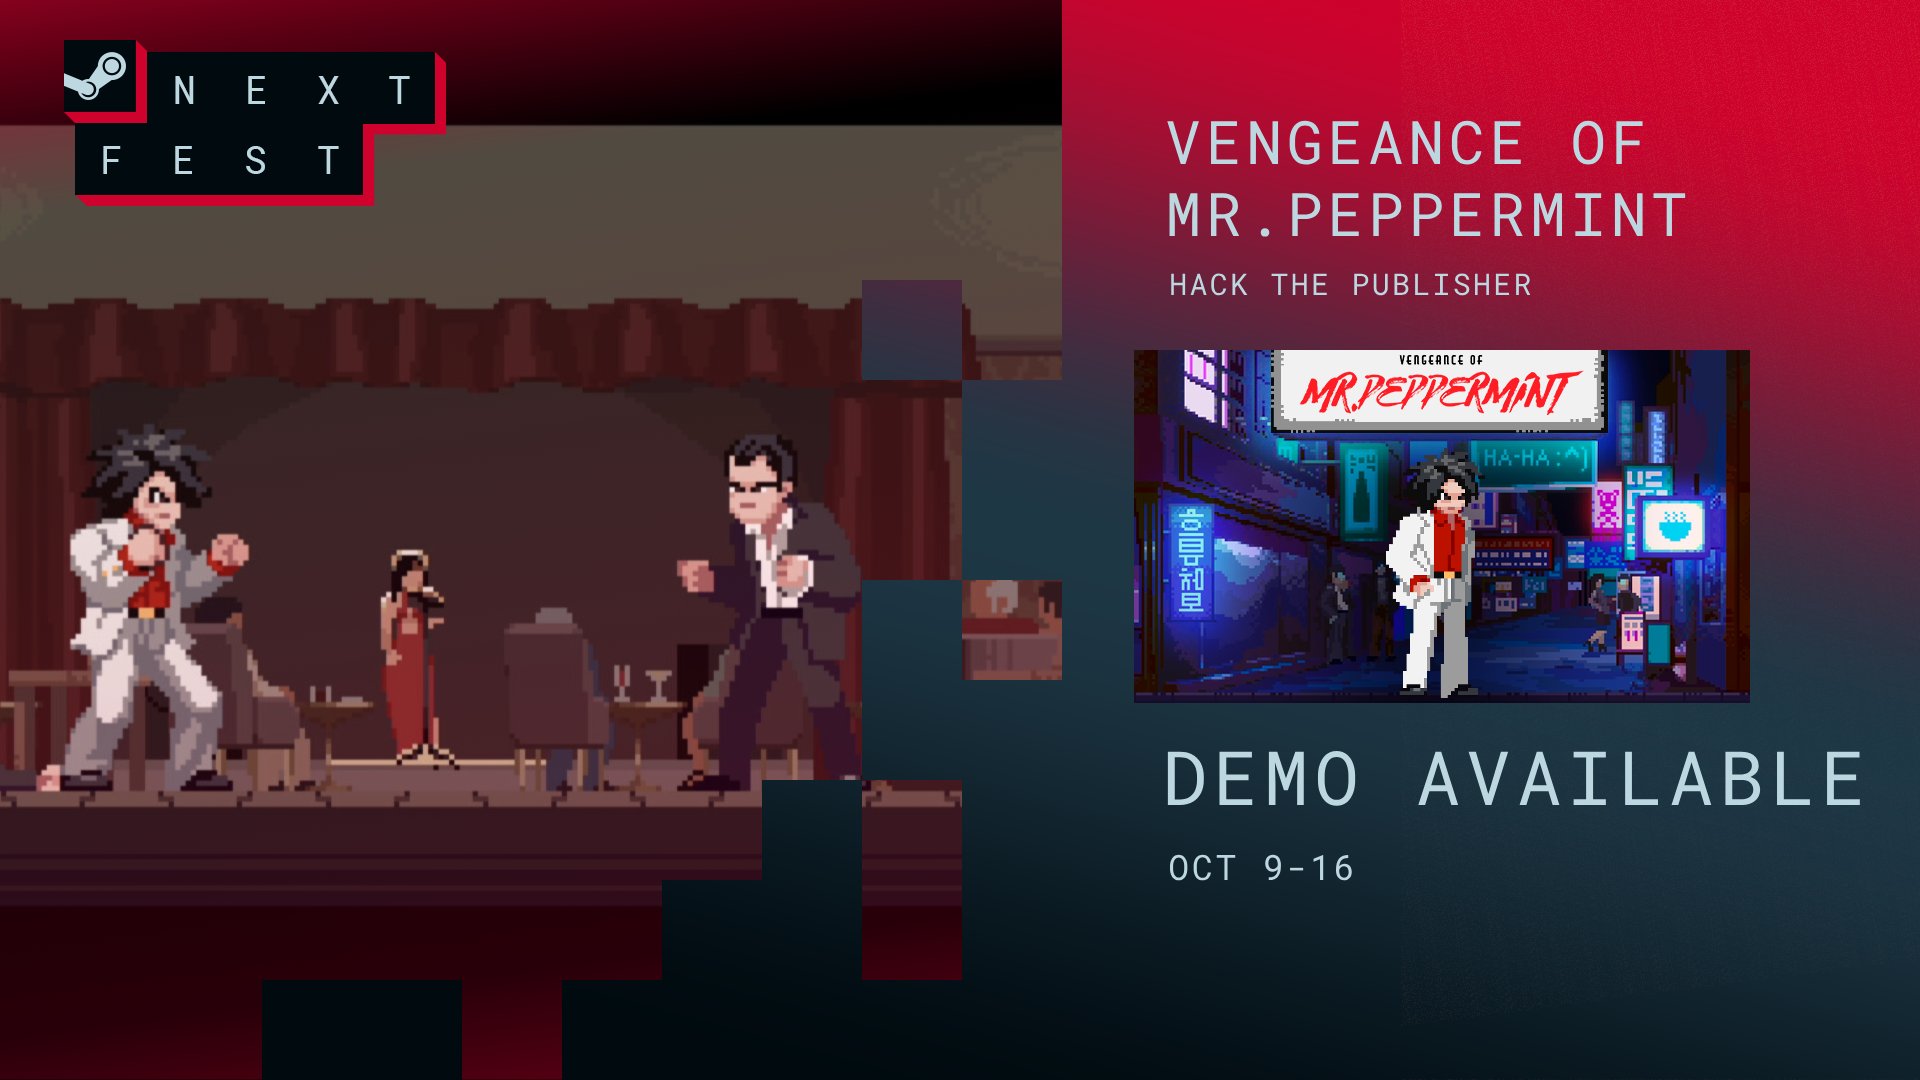 Vengeance of Mr.Peppermint (@HackPublisher) / X